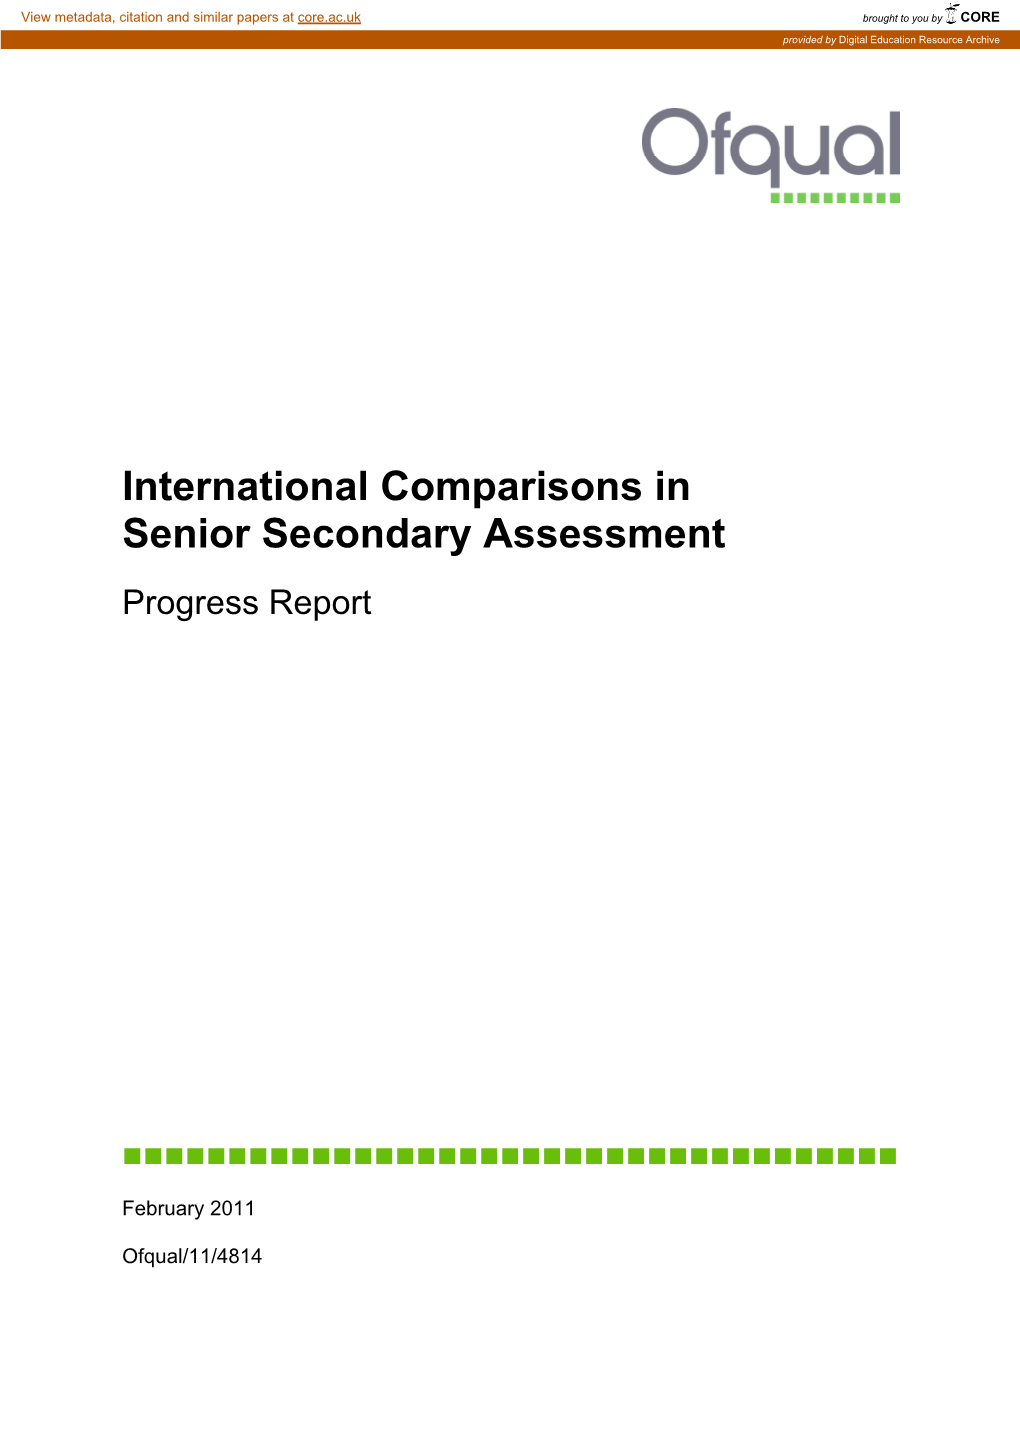 International Comparisons in Senior Secondary Assessment Progress Report